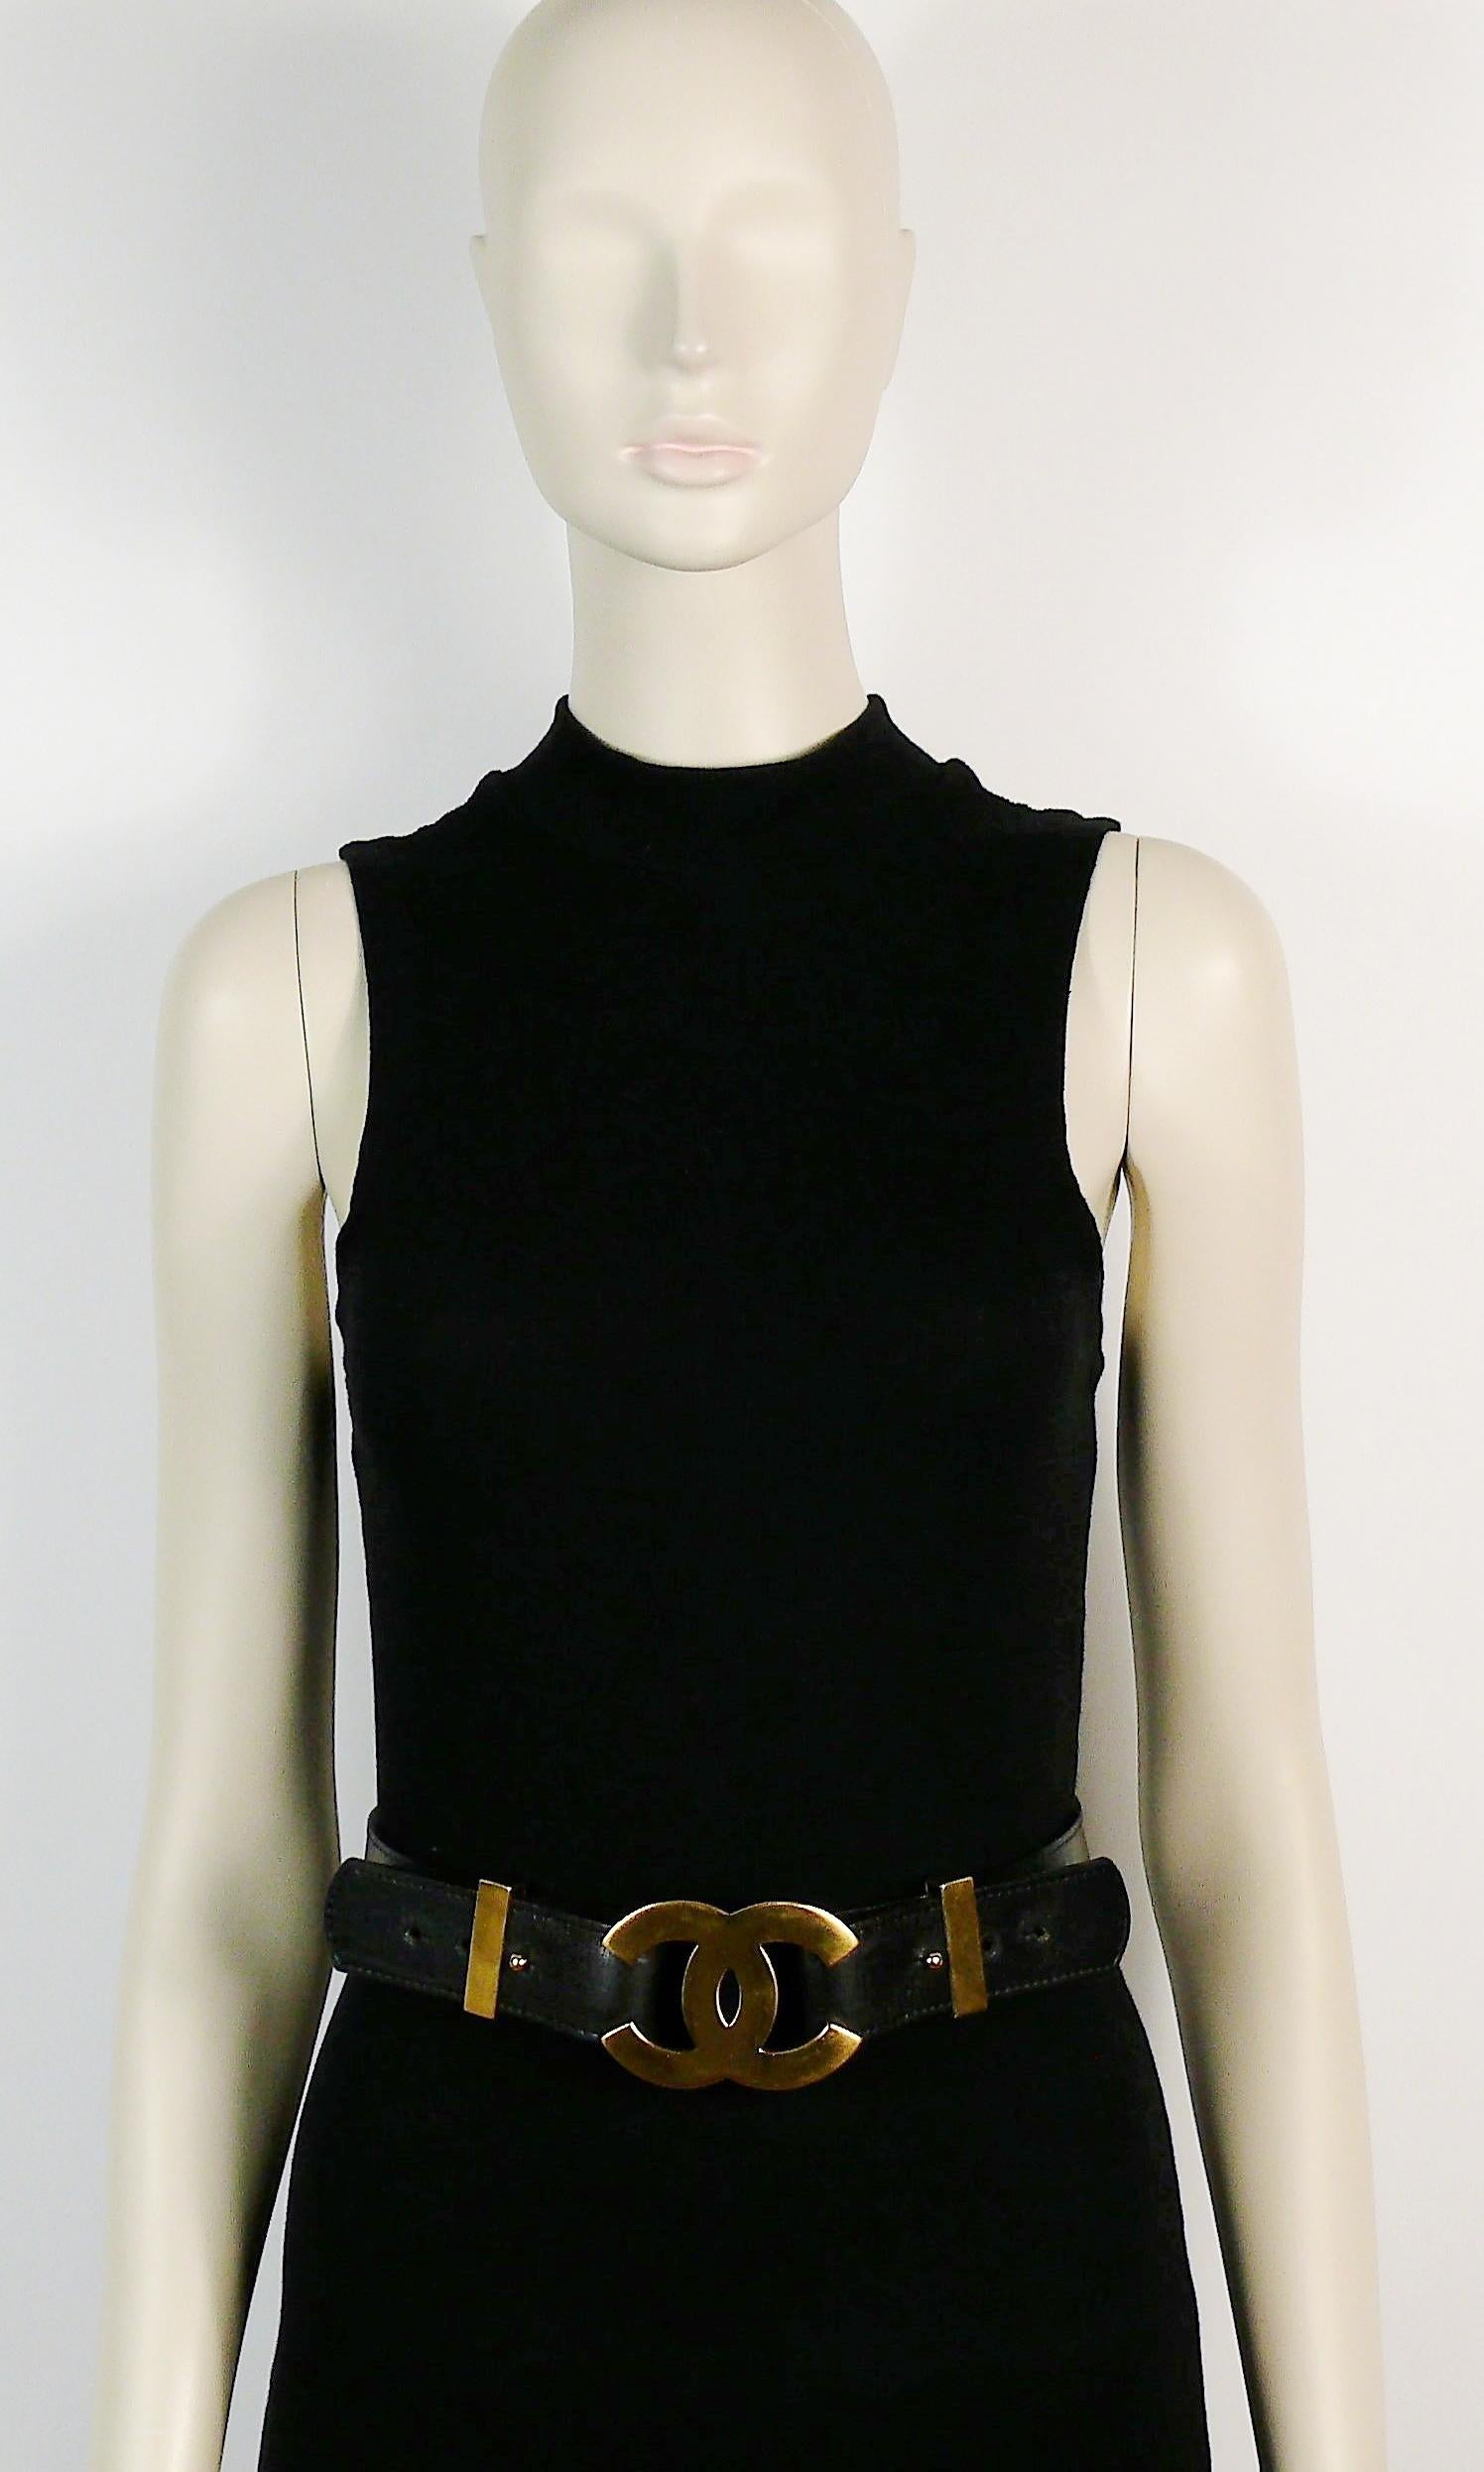 Women's Chanel Vintage 1996 Iconic Black Leather Belt with Large CC logo